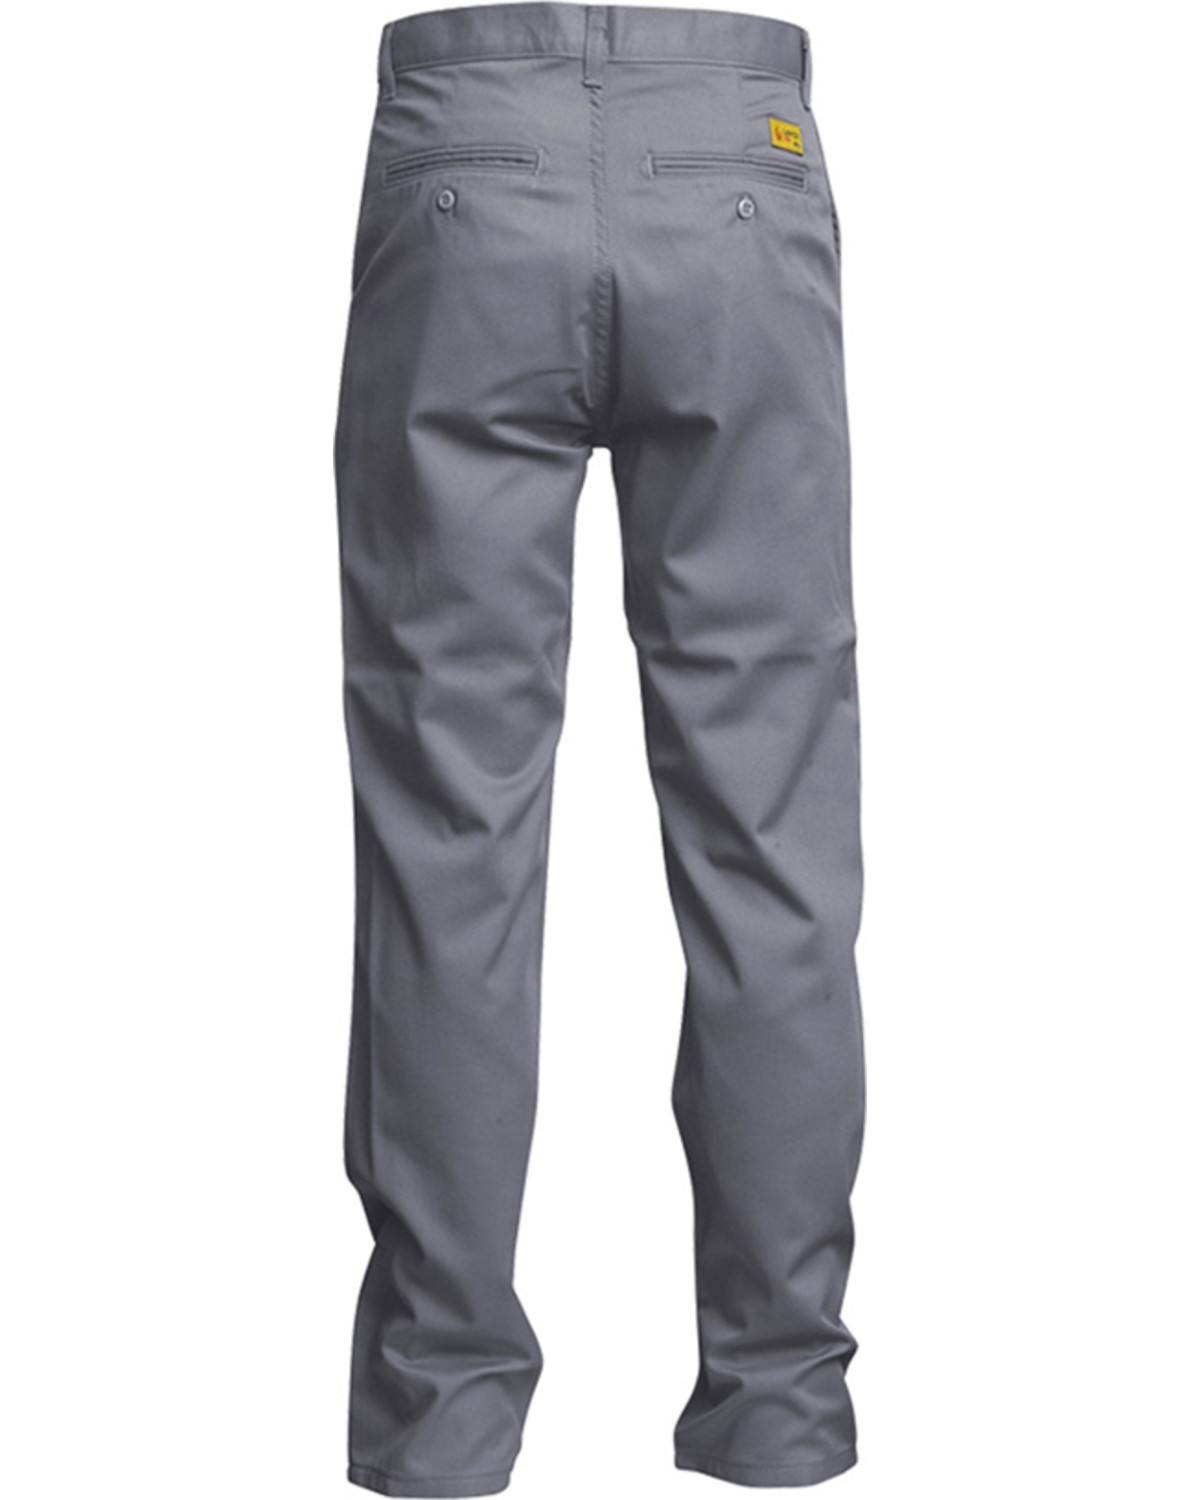 Lapco Men's FR UltraSoft Uniform Straight Leg Pants